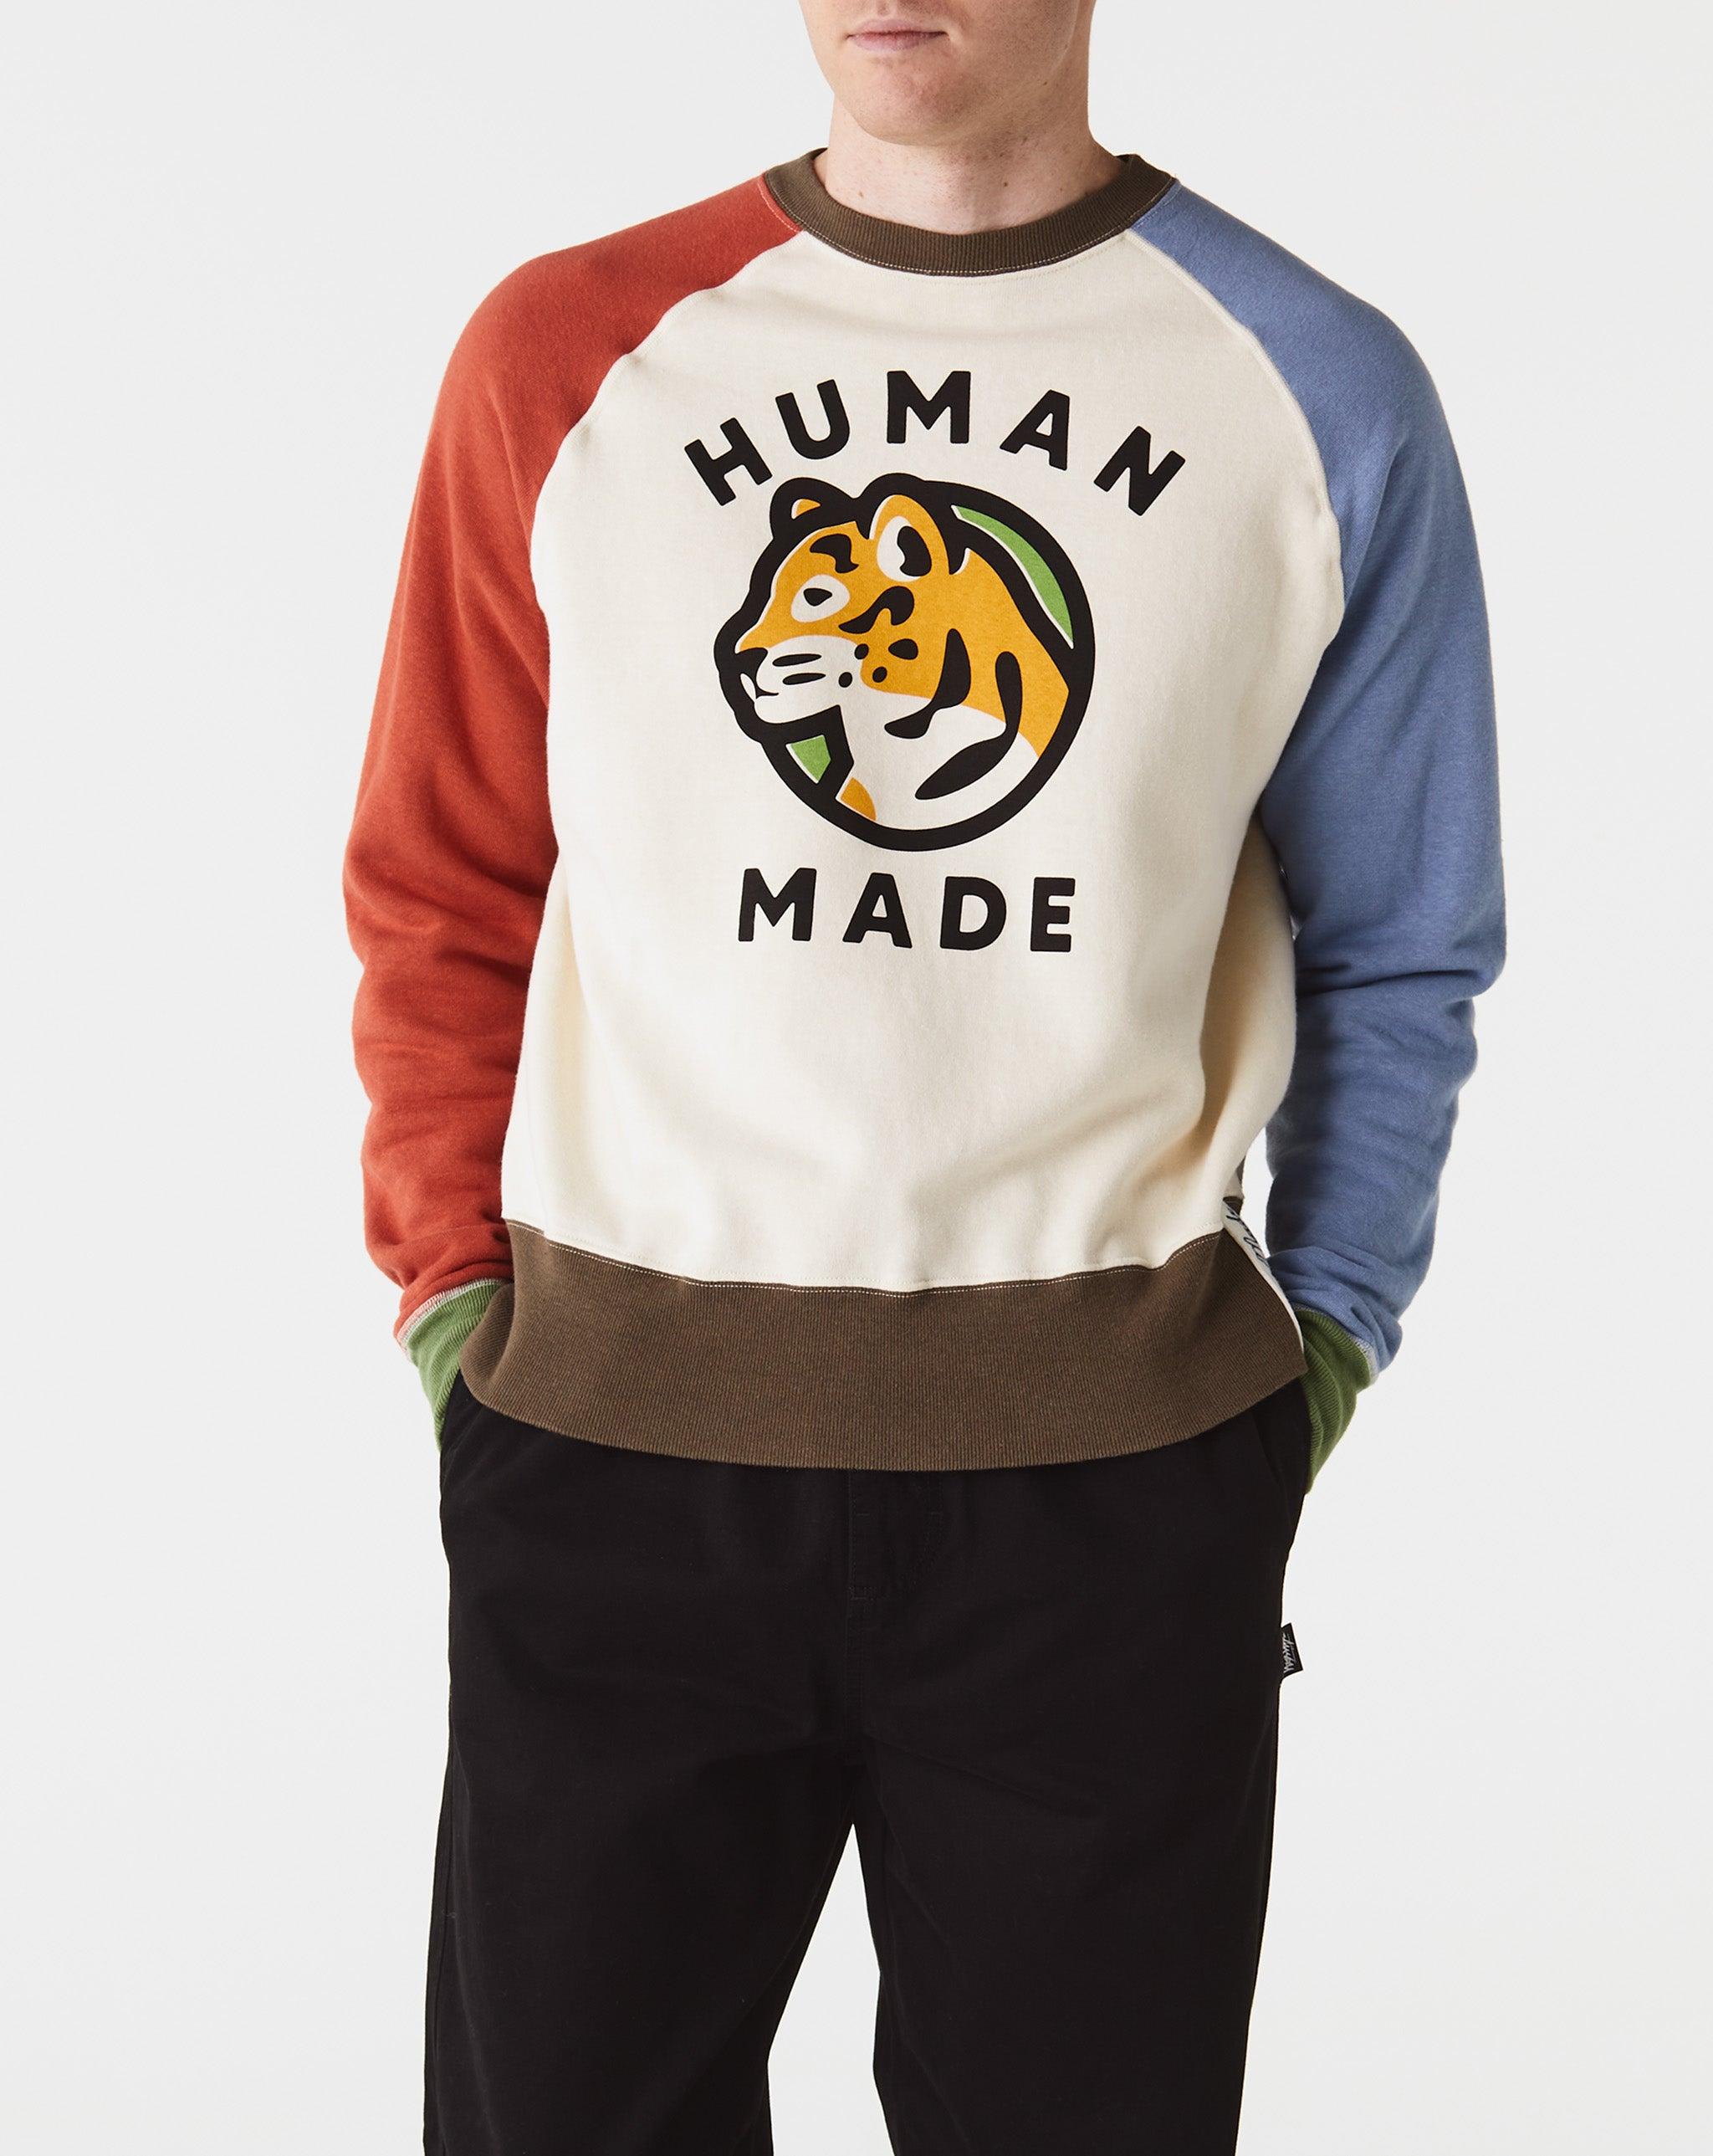 Human Made Tsuriami Crazy Sweatshirt in Gray for Men